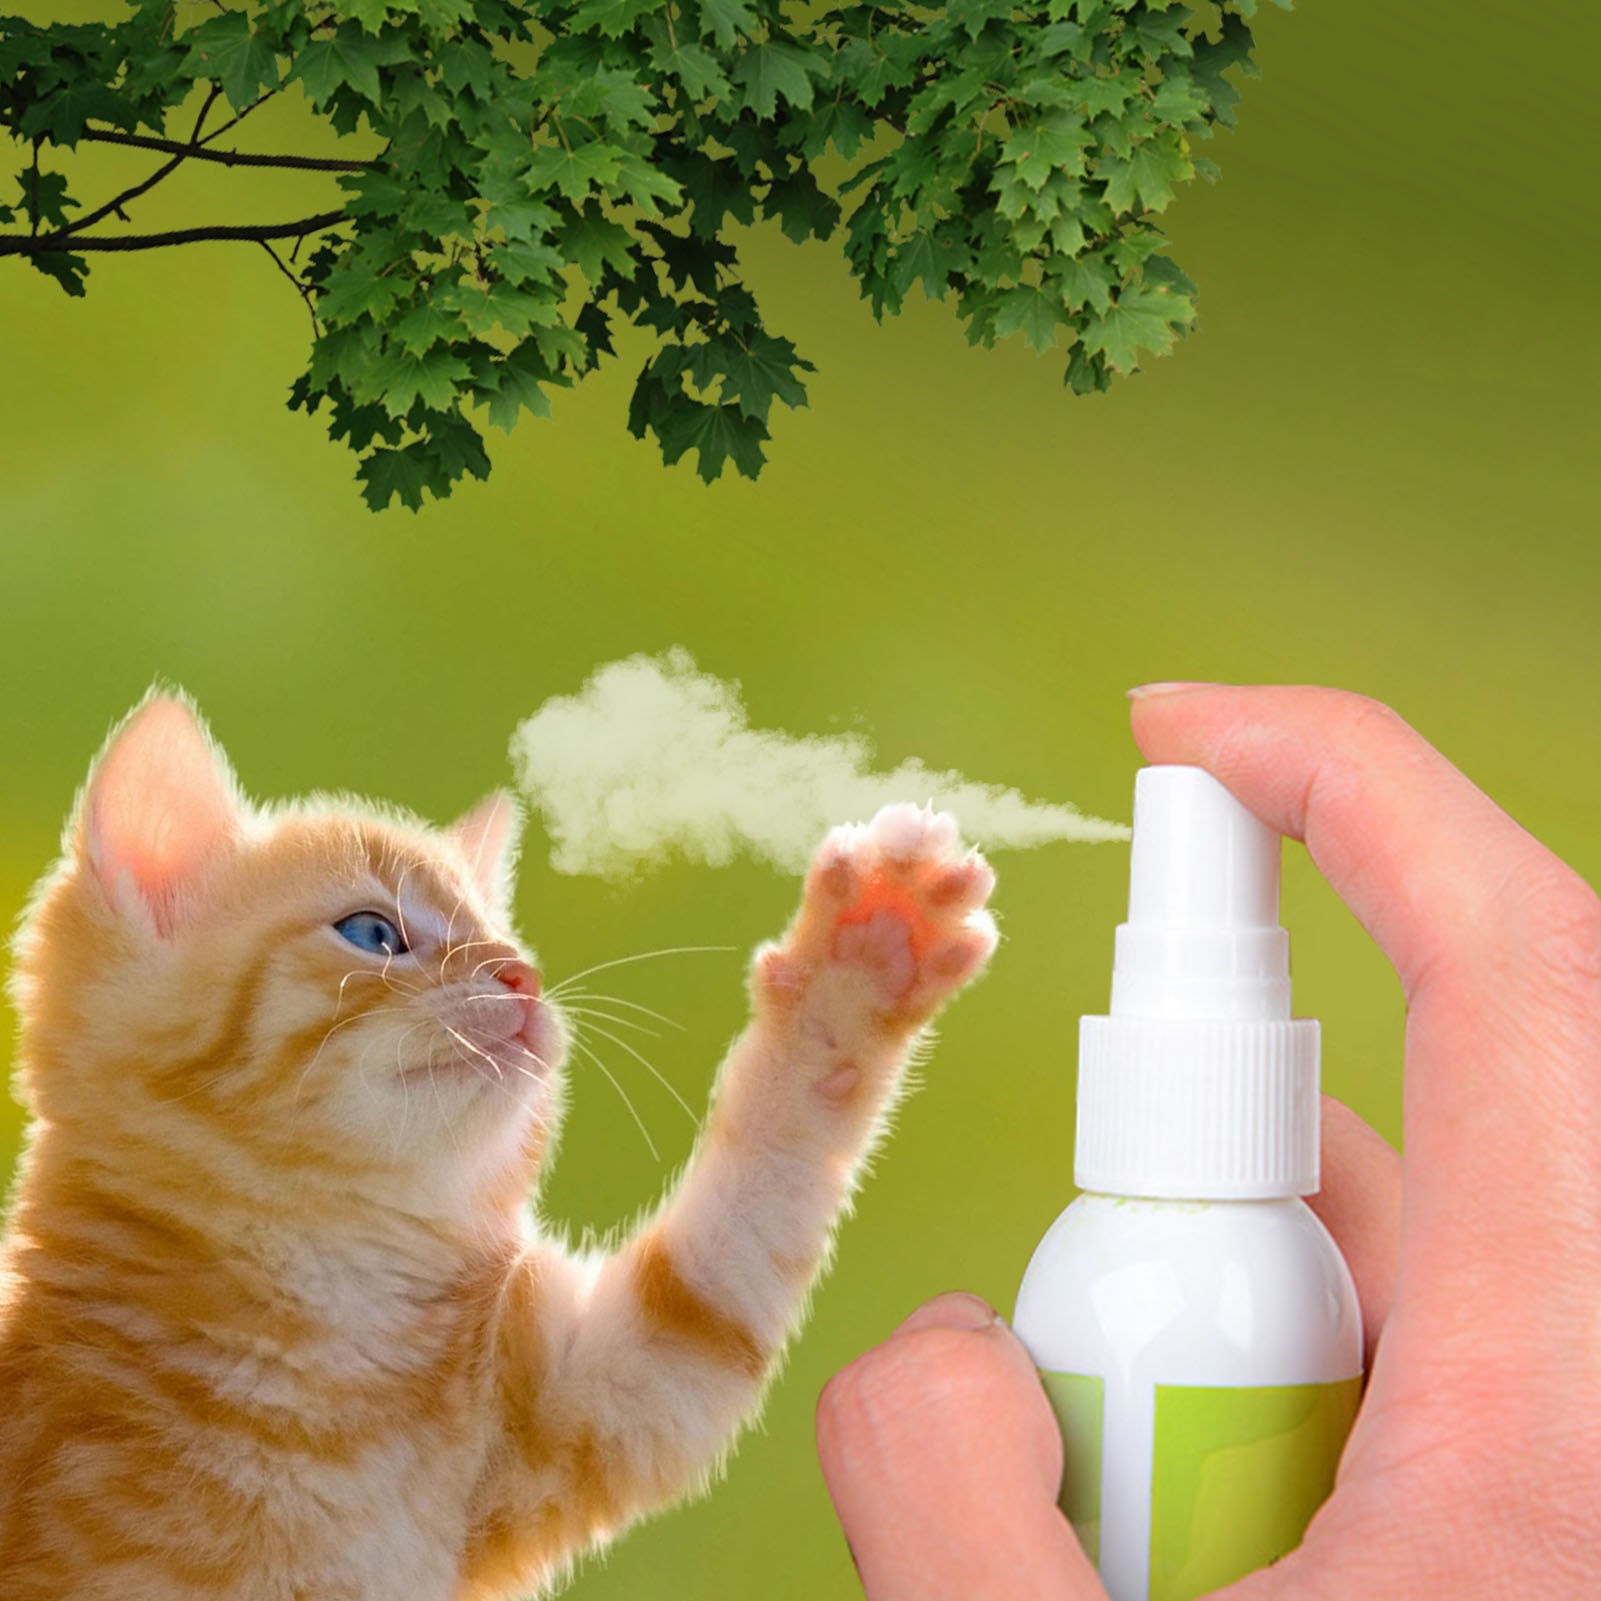 Catnip spray for Cats